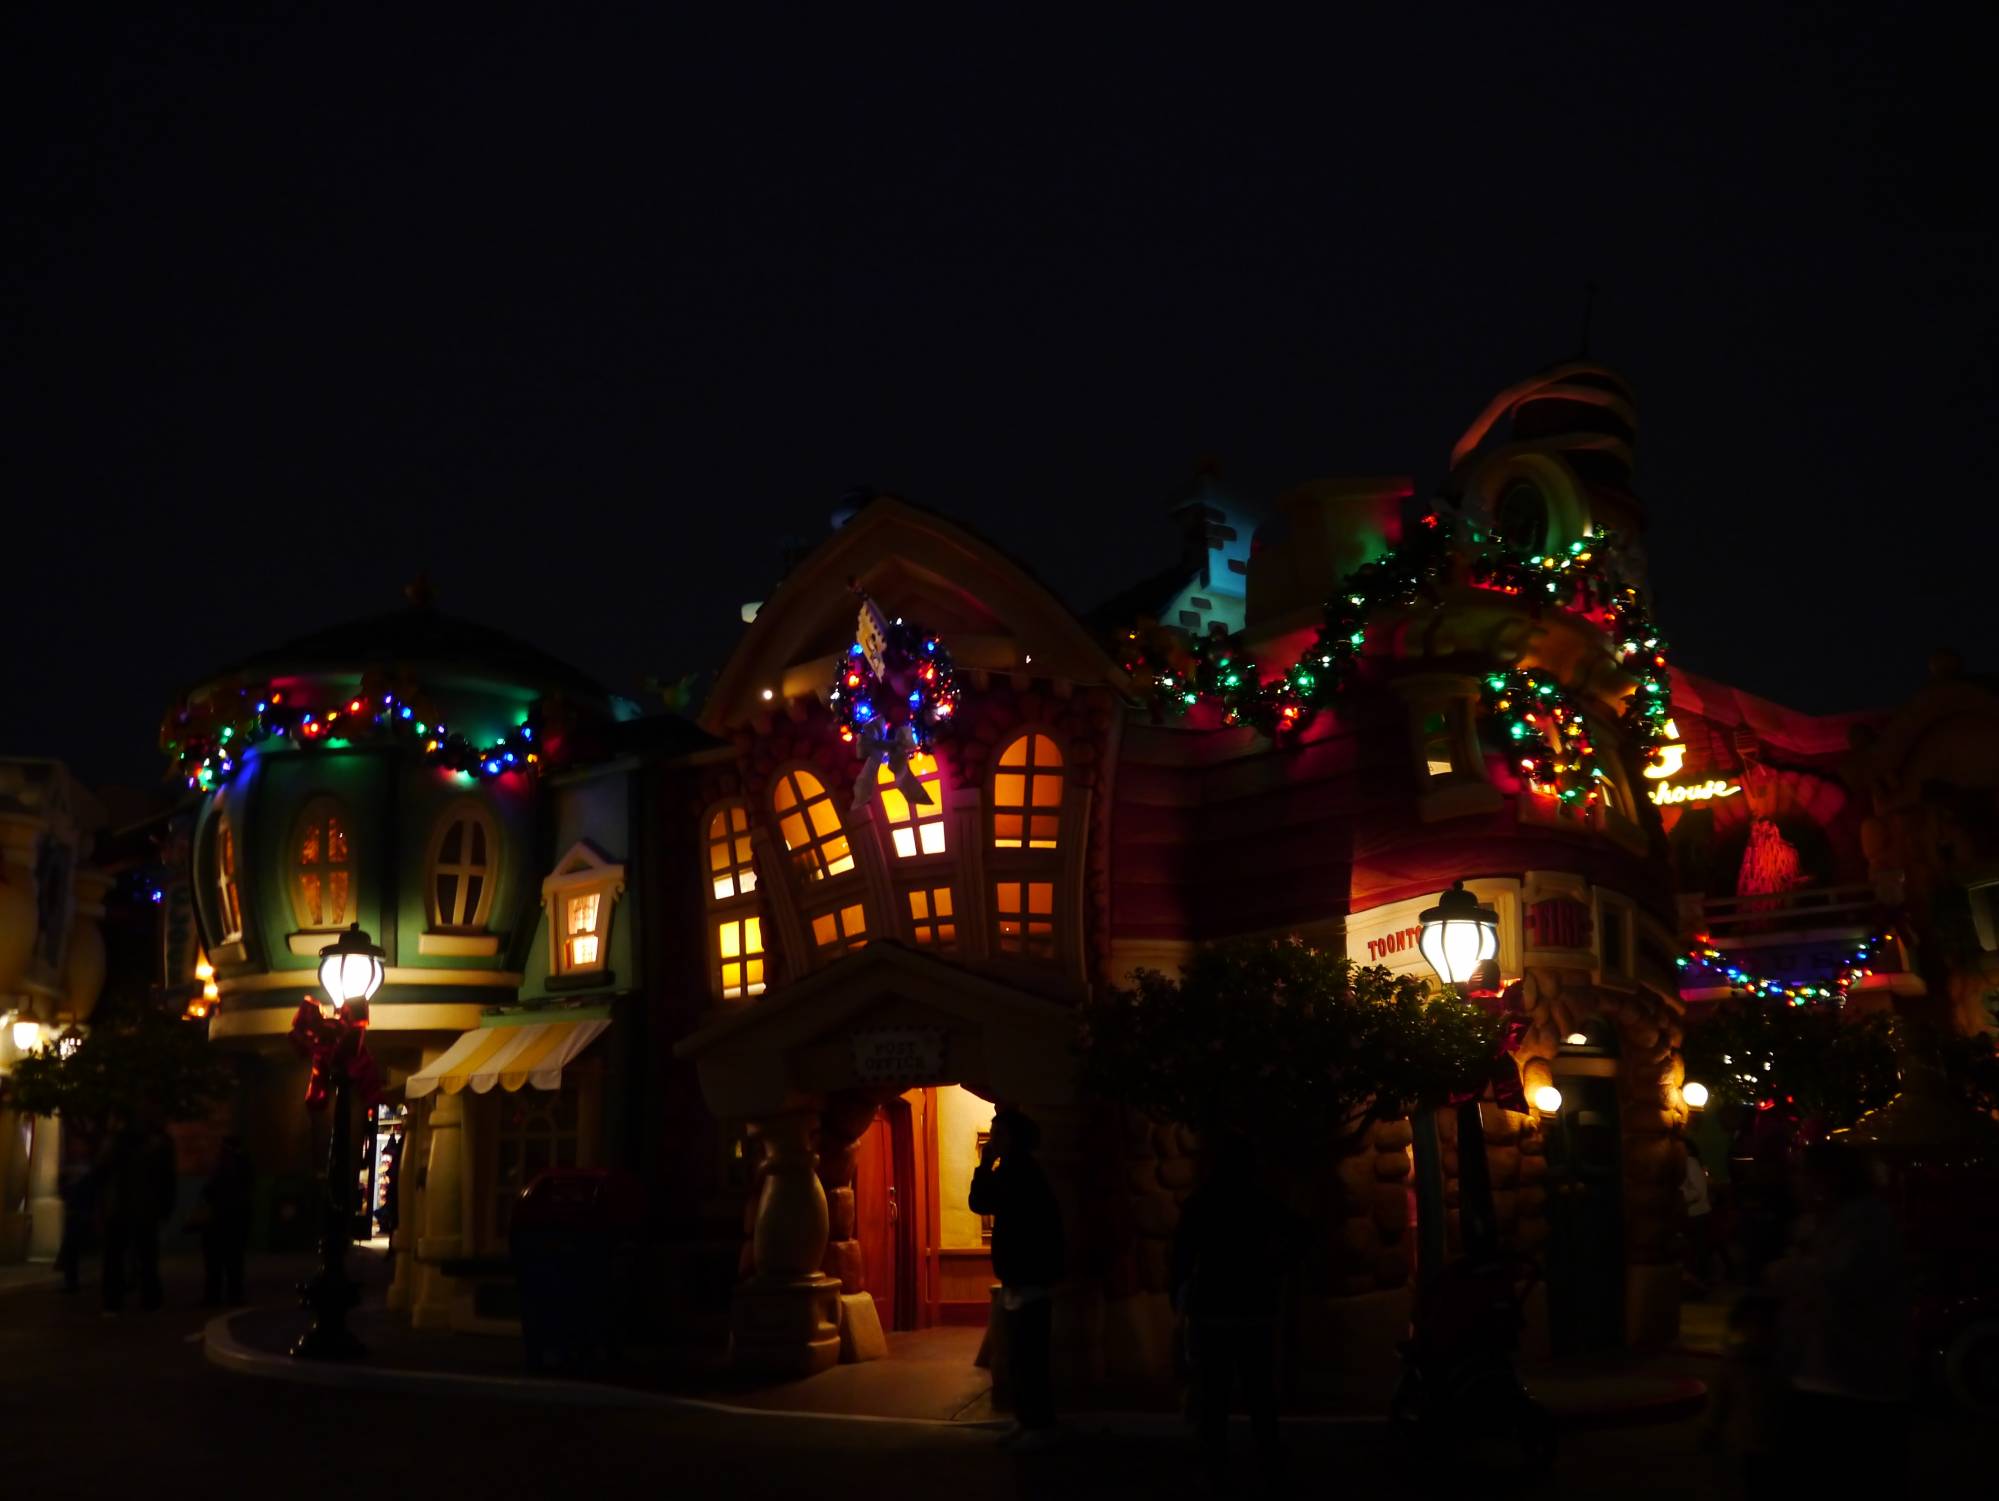 Disneyland Park - Mickey's Toontown at night